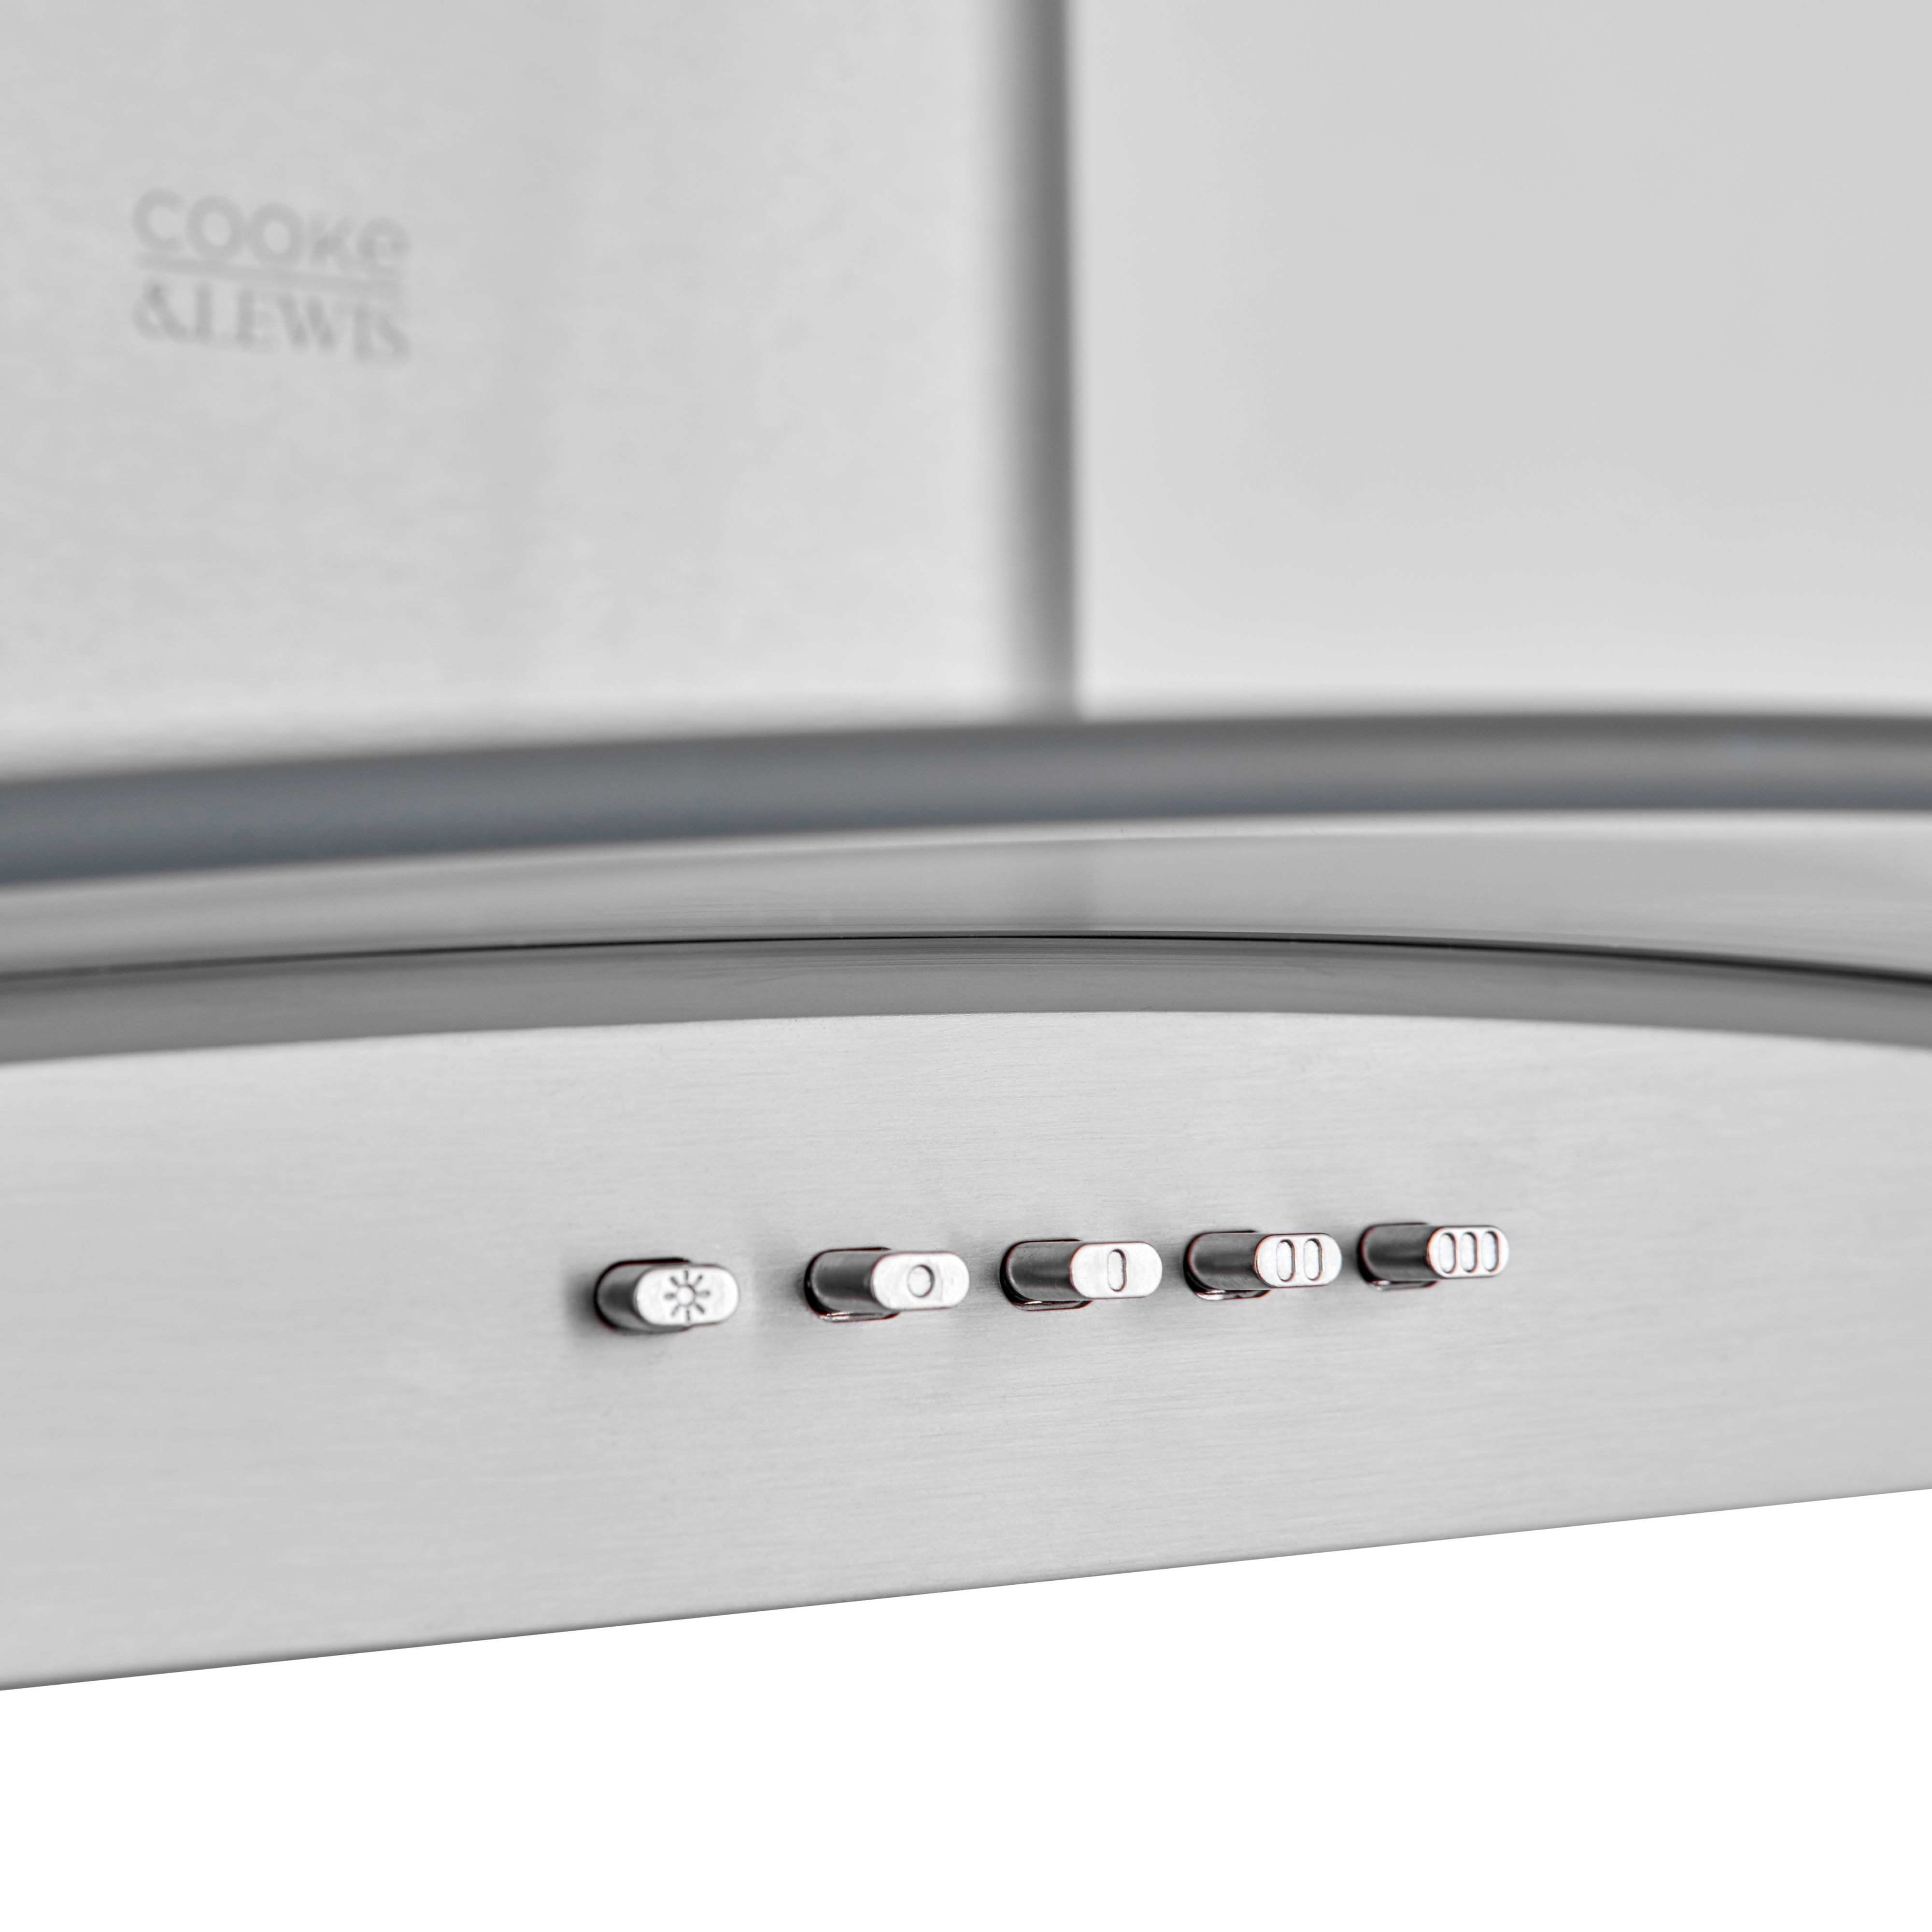 Cooke & Lewis CLCGS90 Stainless steel Curved Cooker hood (W)90cm - Inox